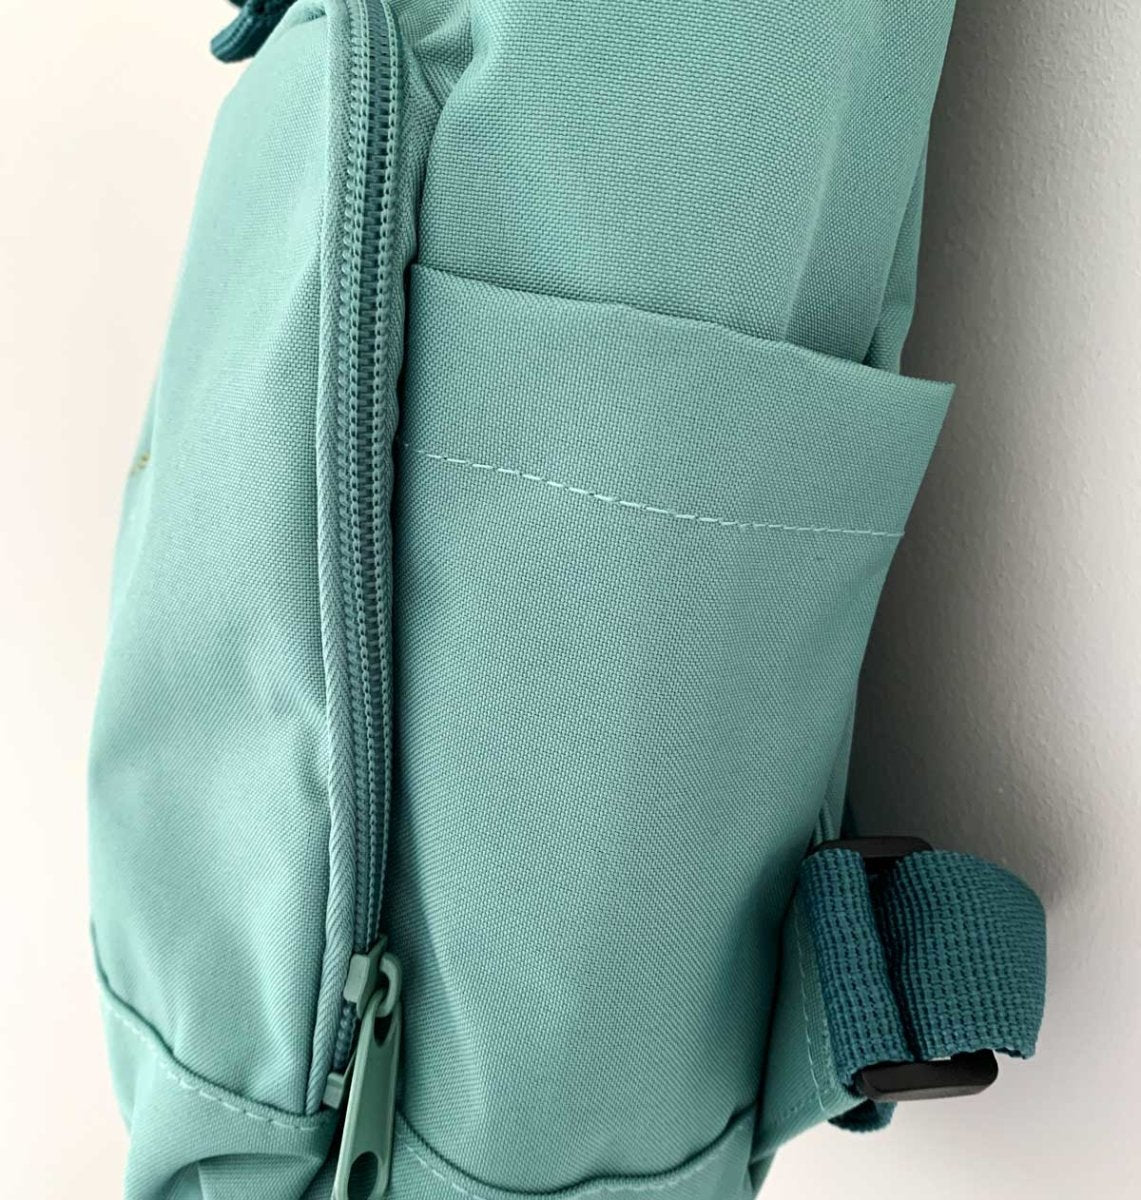 Fox Mini Roll-top Recycled Backpack - Blue Panda